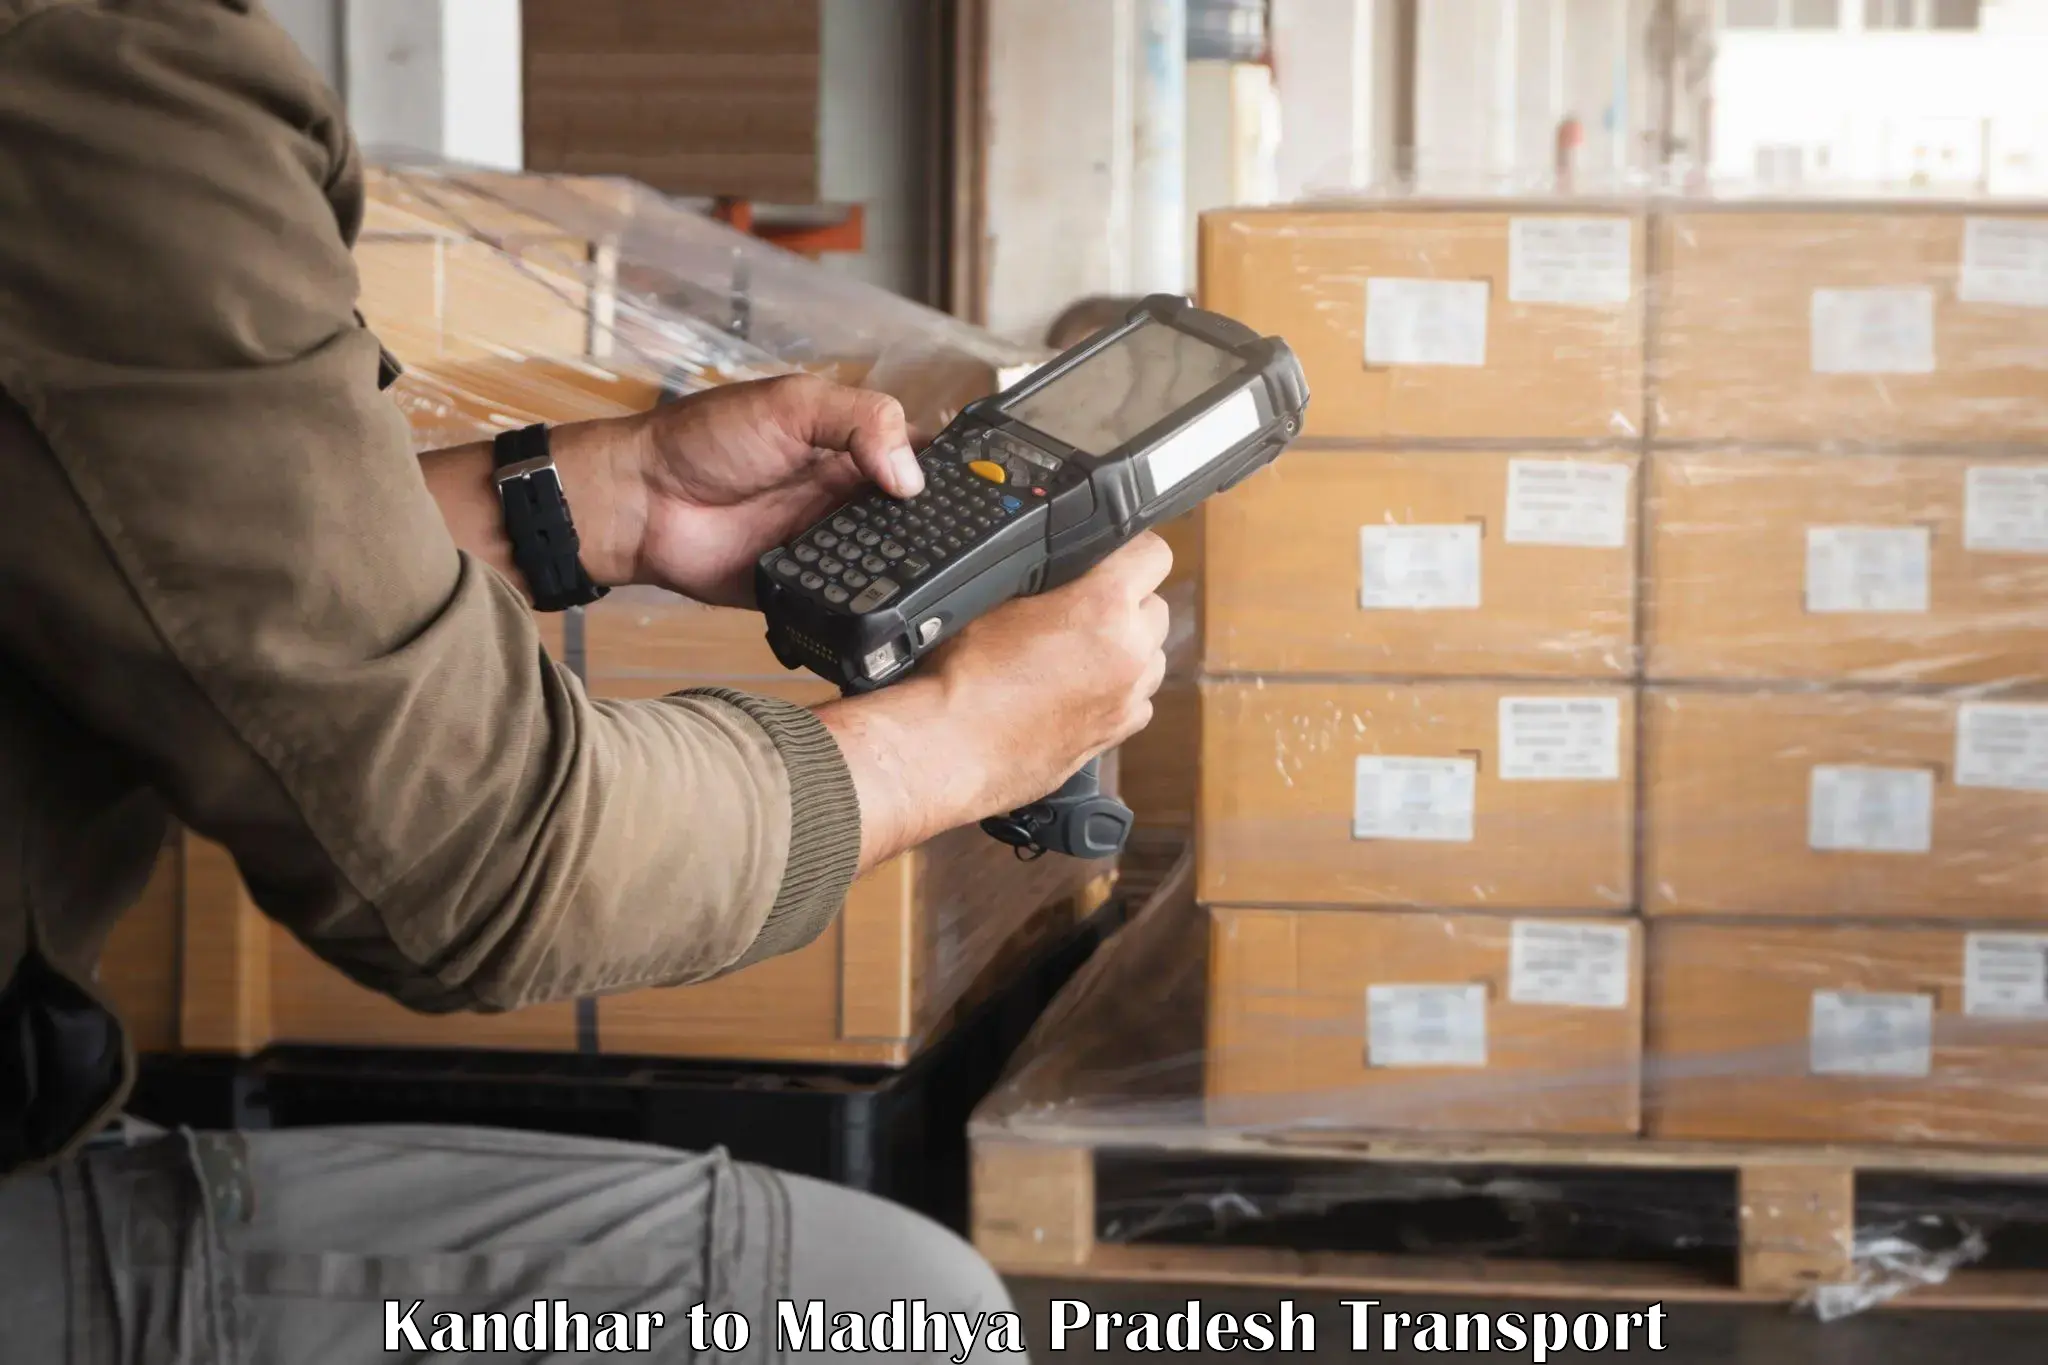 Truck transport companies in India Kandhar to Khandwa